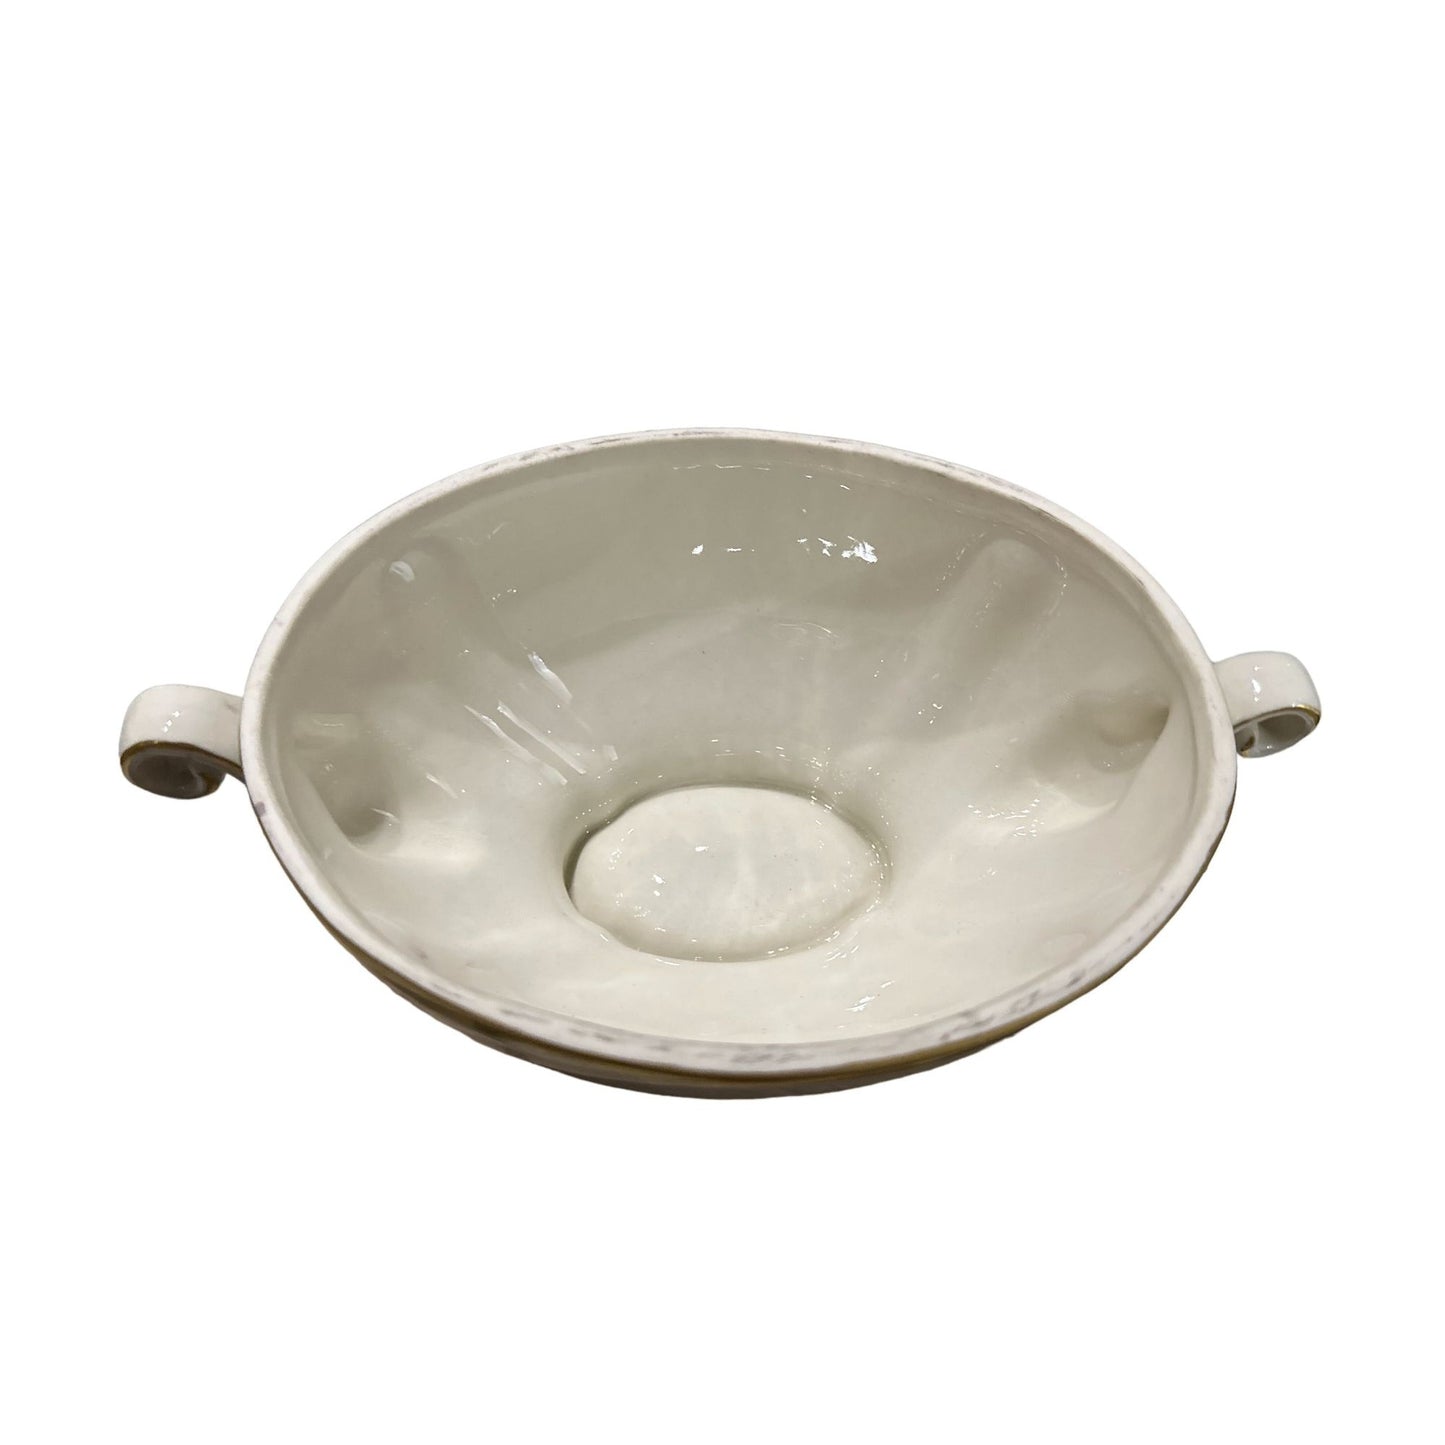 Vintage Porcelain Soup Bowl with Lid Gold Fly Design Elegant Tableware Collectible